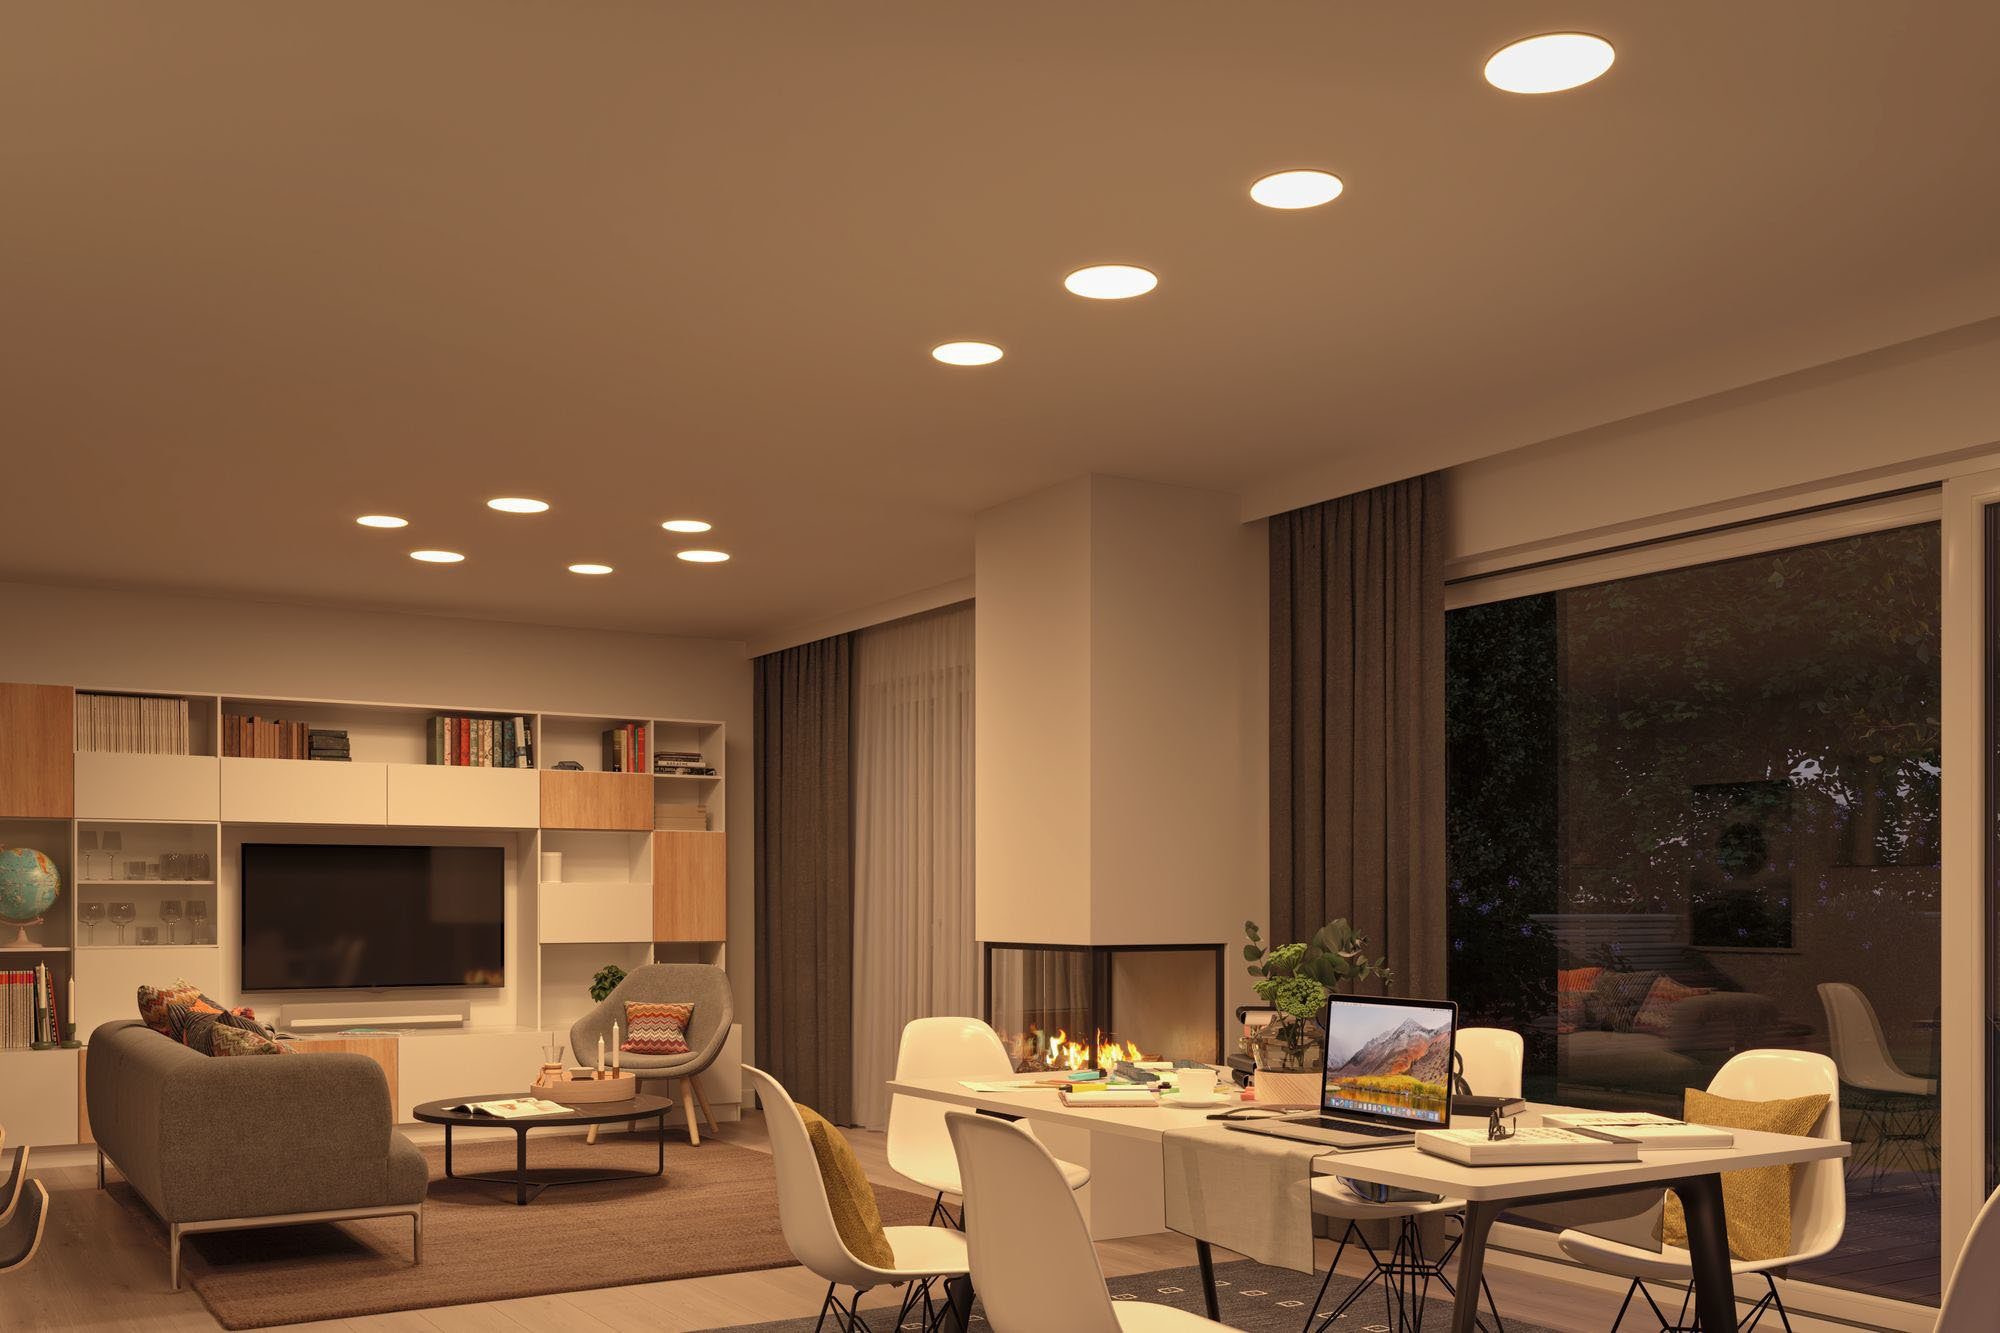 warmweiß Veluna, White LED-Modul, Paulmann LED Smart Einbauleuchte LED fest - Tunable Home, kaltweiß, integriert,